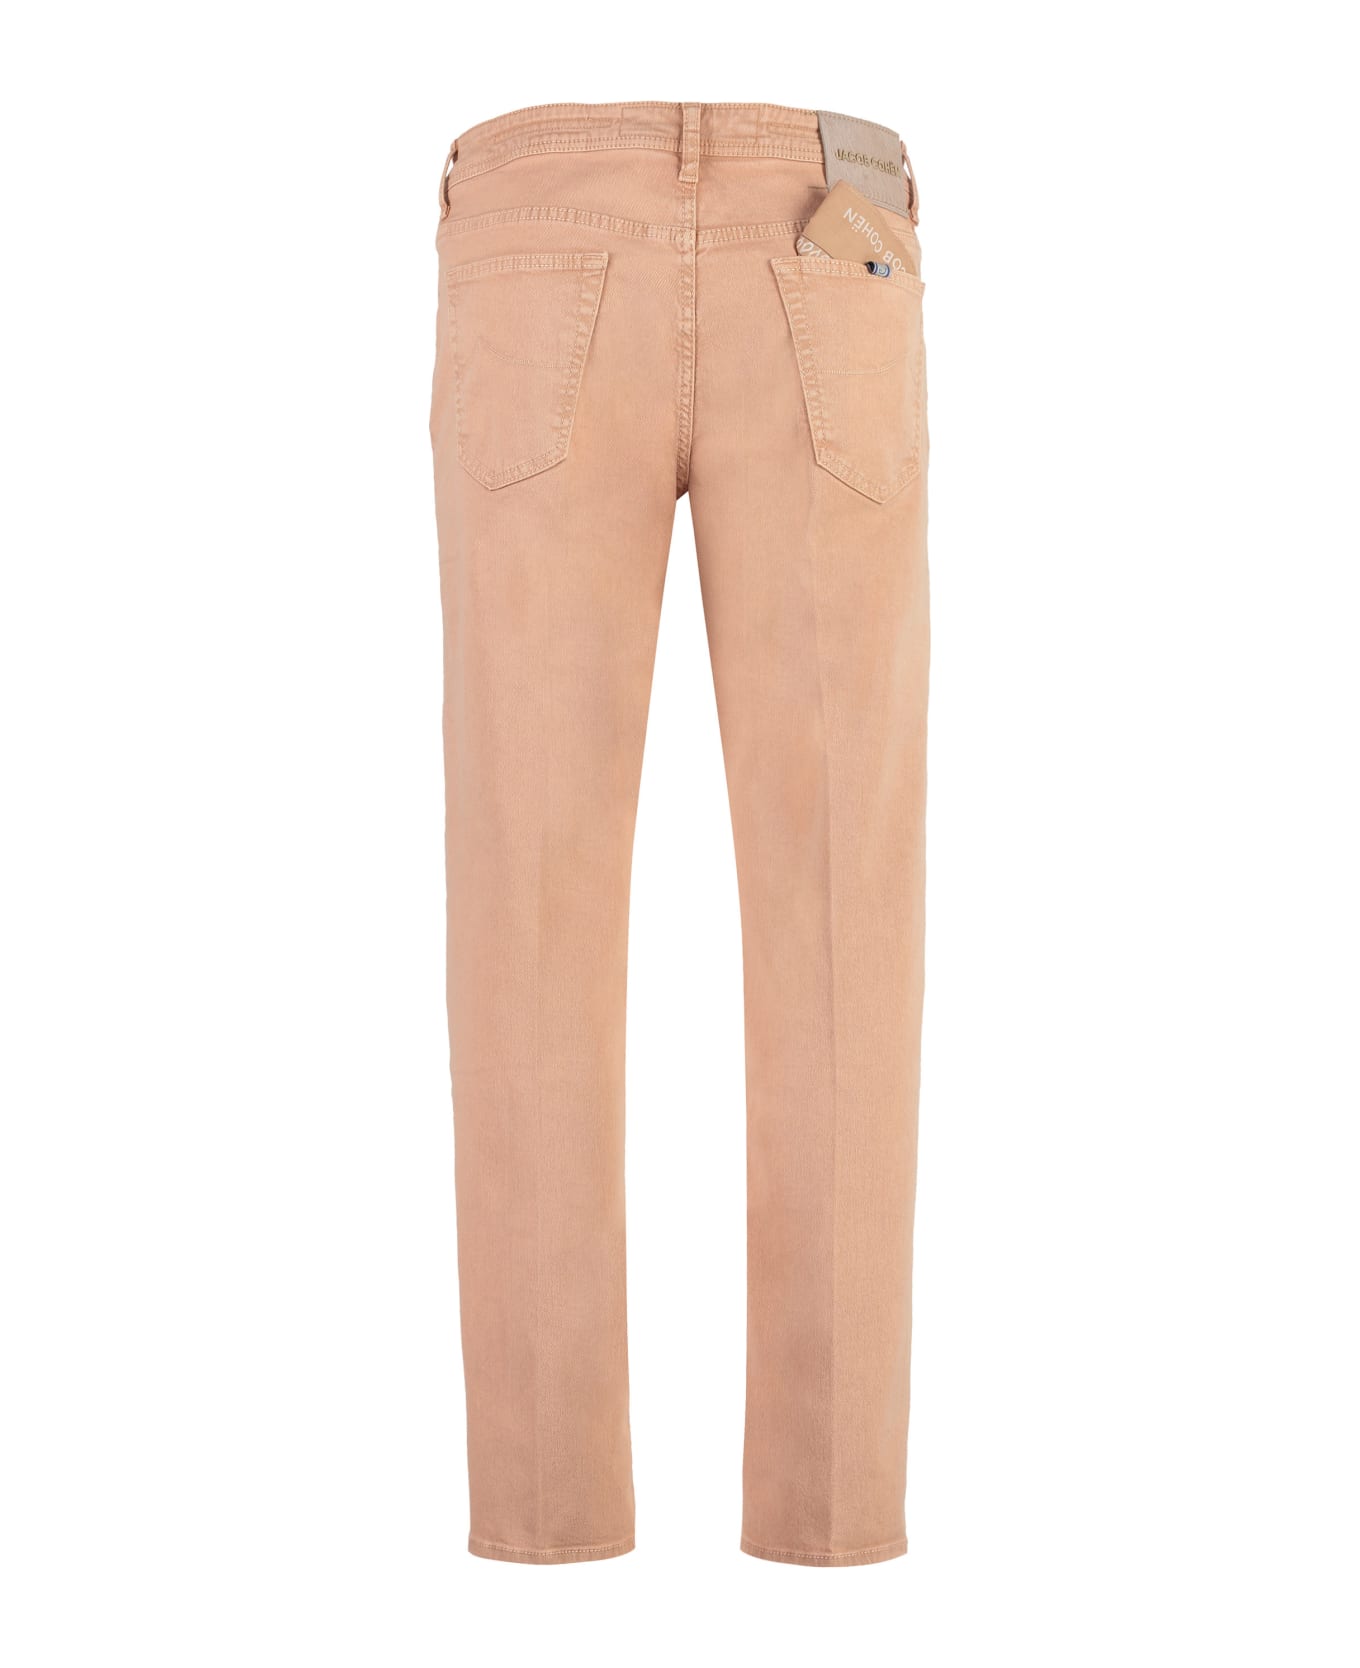 Jacob Cohen 5-pocket Slim Fit Jeans - Salmon pink